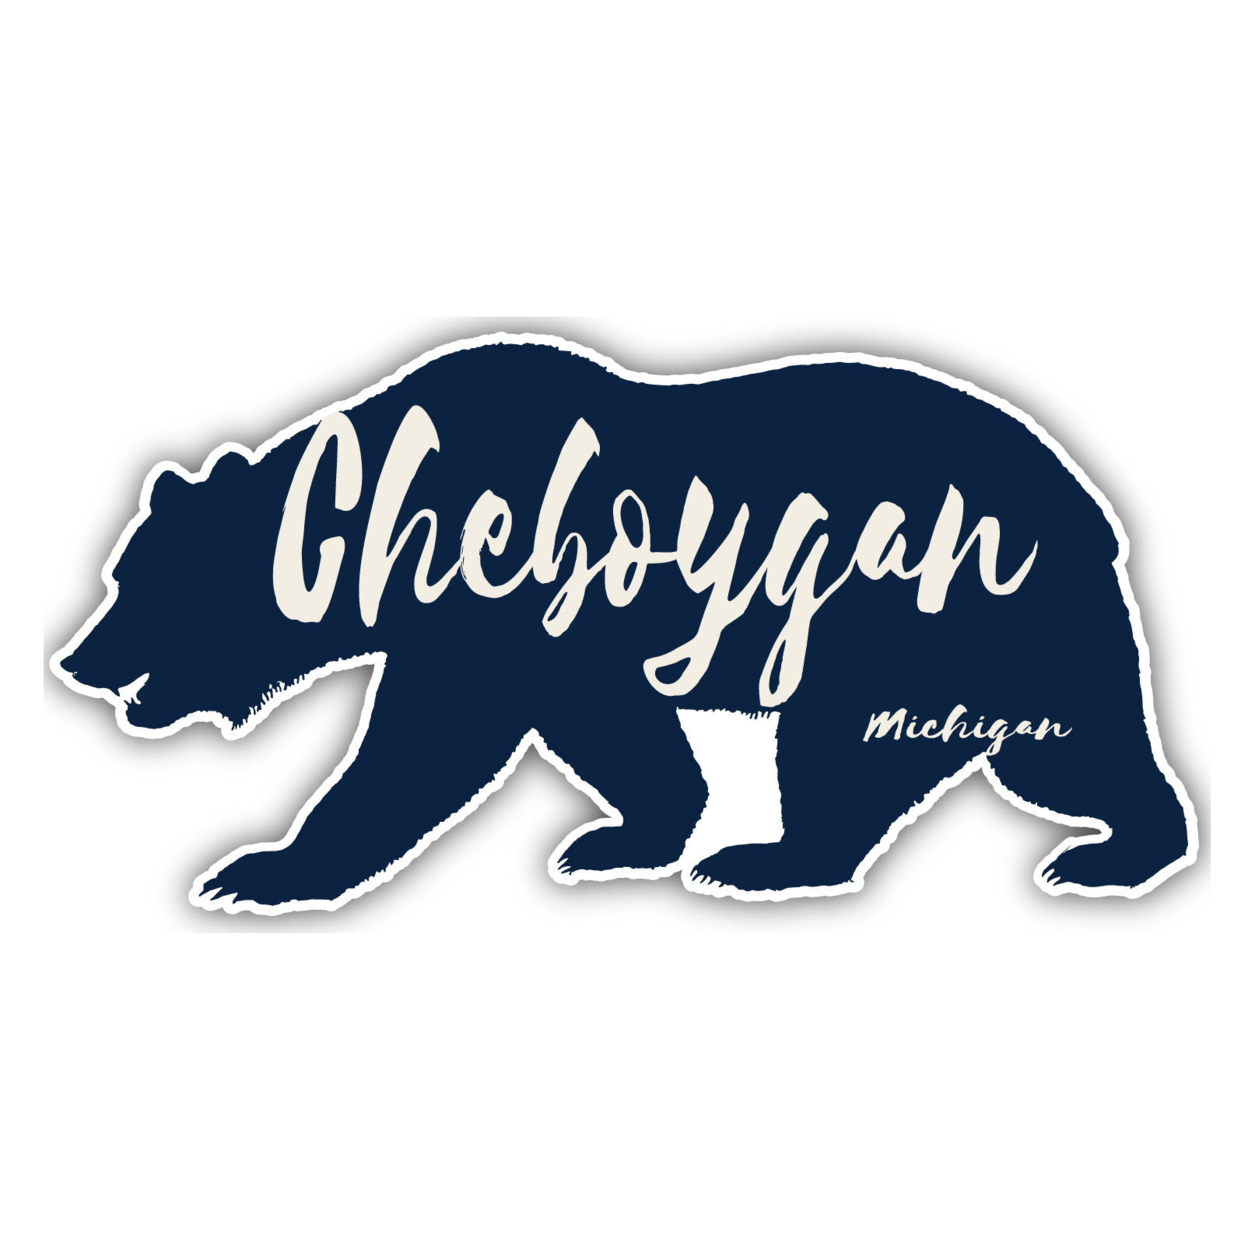 Cheboygan Michigan Souvenir Decorative Stickers (Choose Theme And Size) - Single Unit, 12-Inch, Great Outdoors